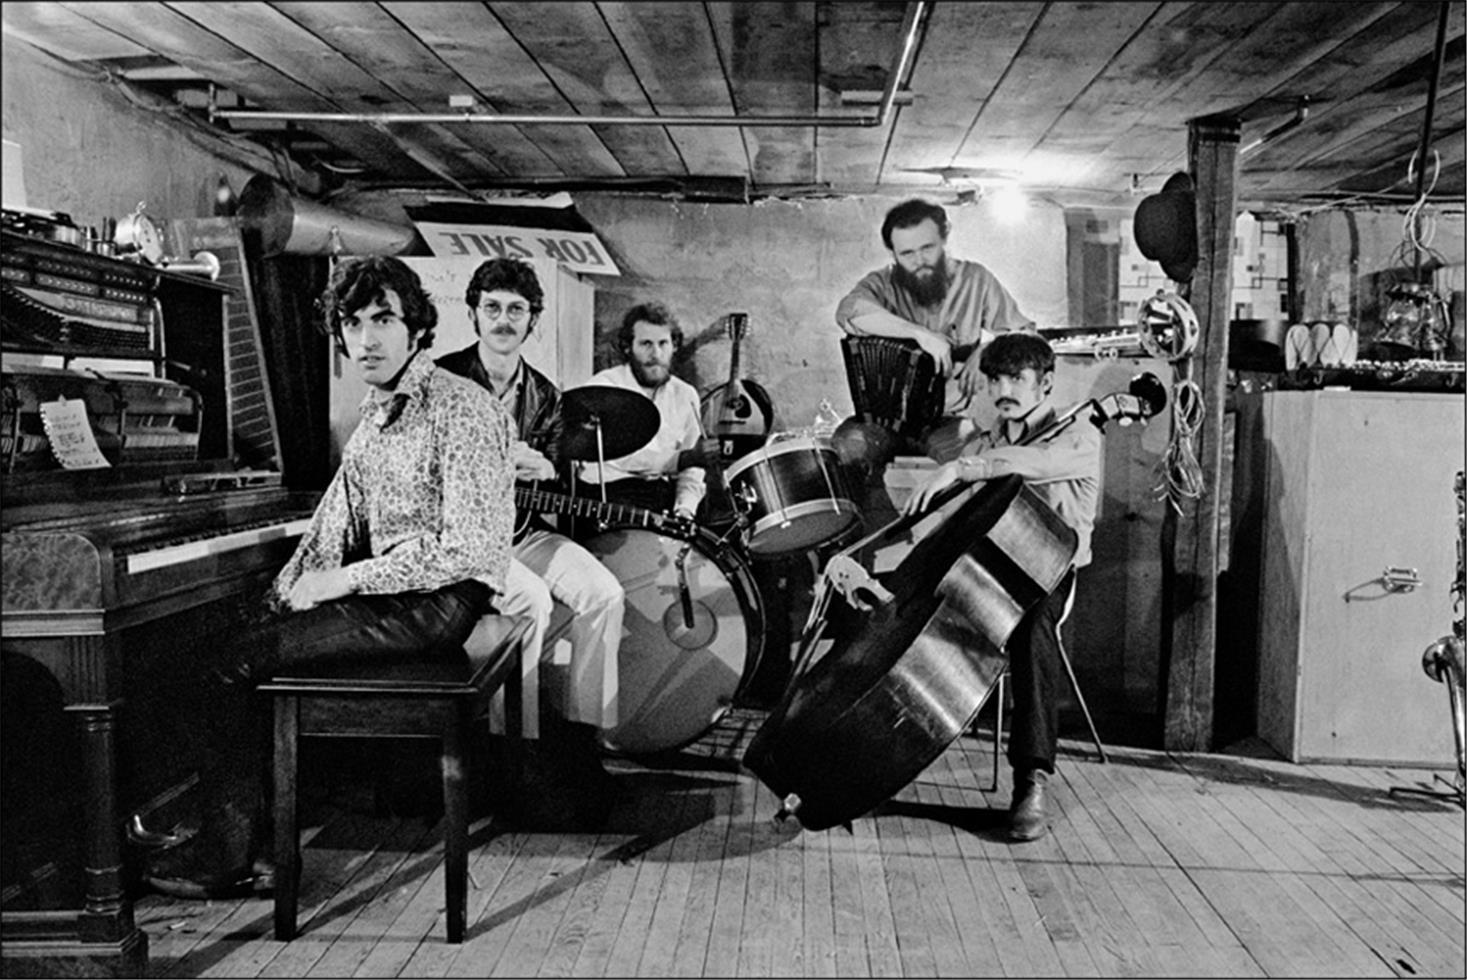 Elliott Landy Black and White Photograph - The Band, basement of Rick Danko’s Zena Rd. home, Woodstock, 1969